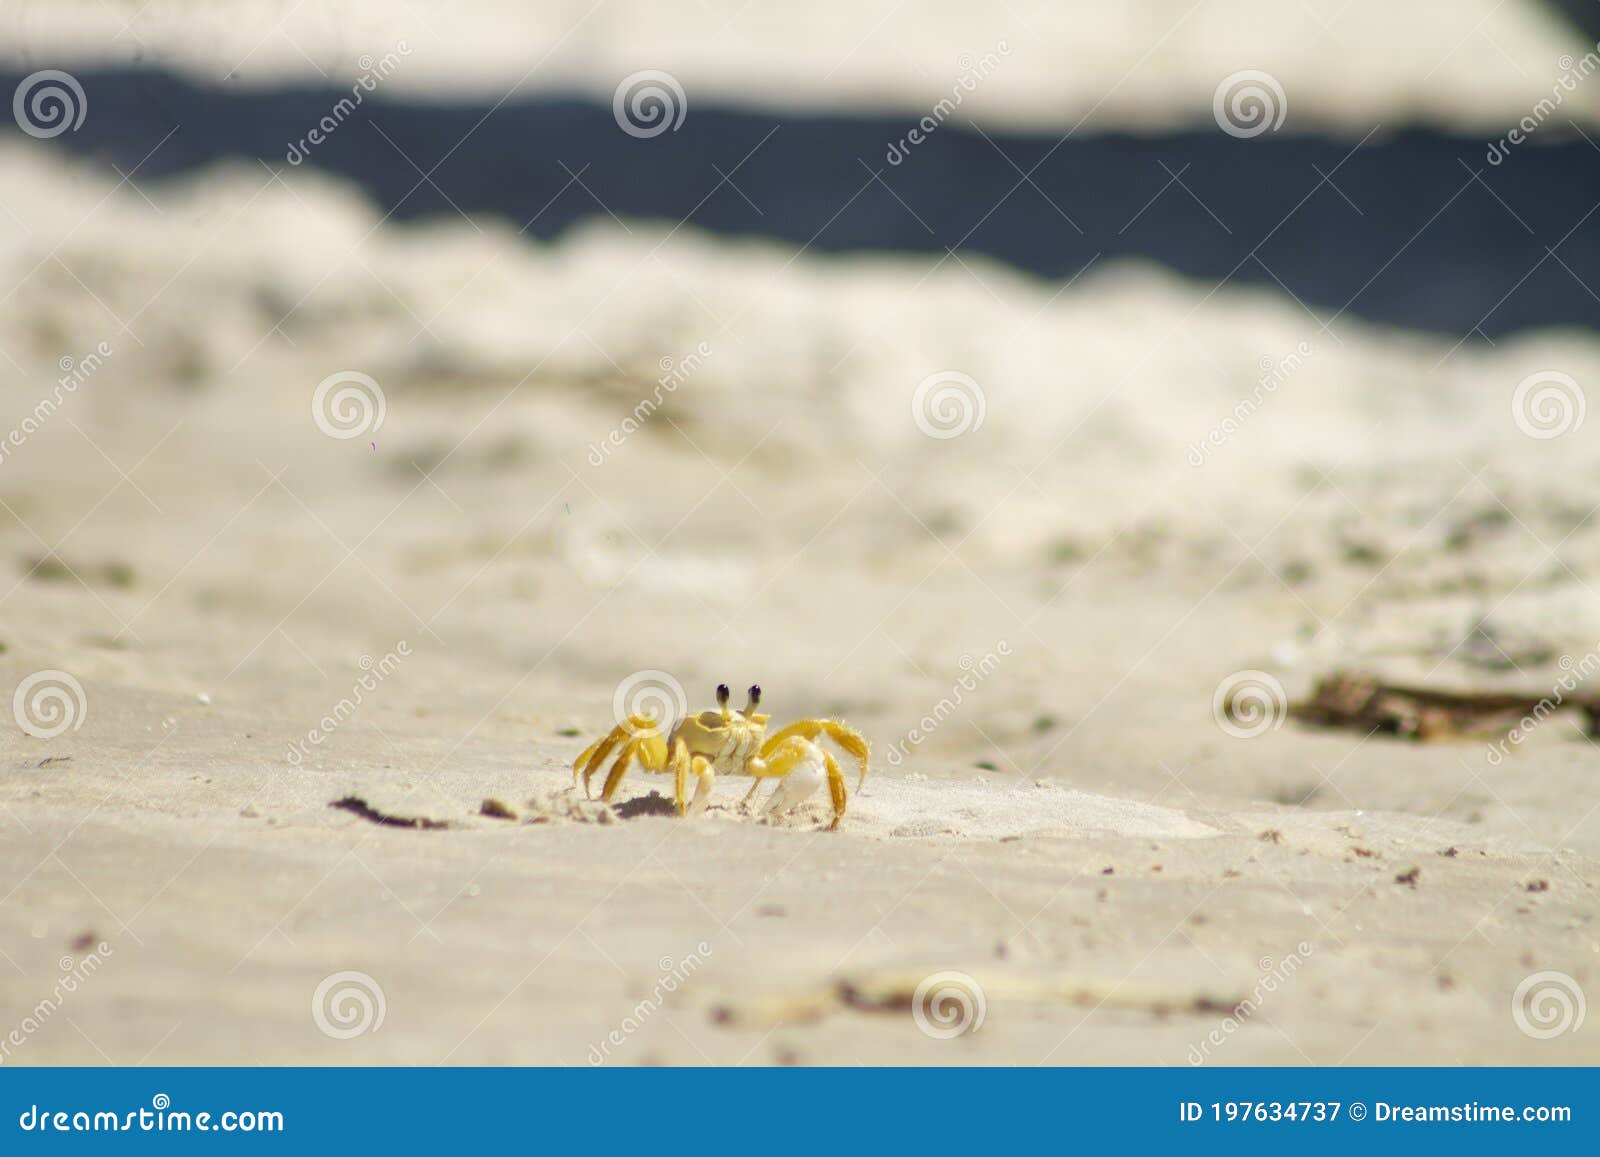 crab on the beach sand